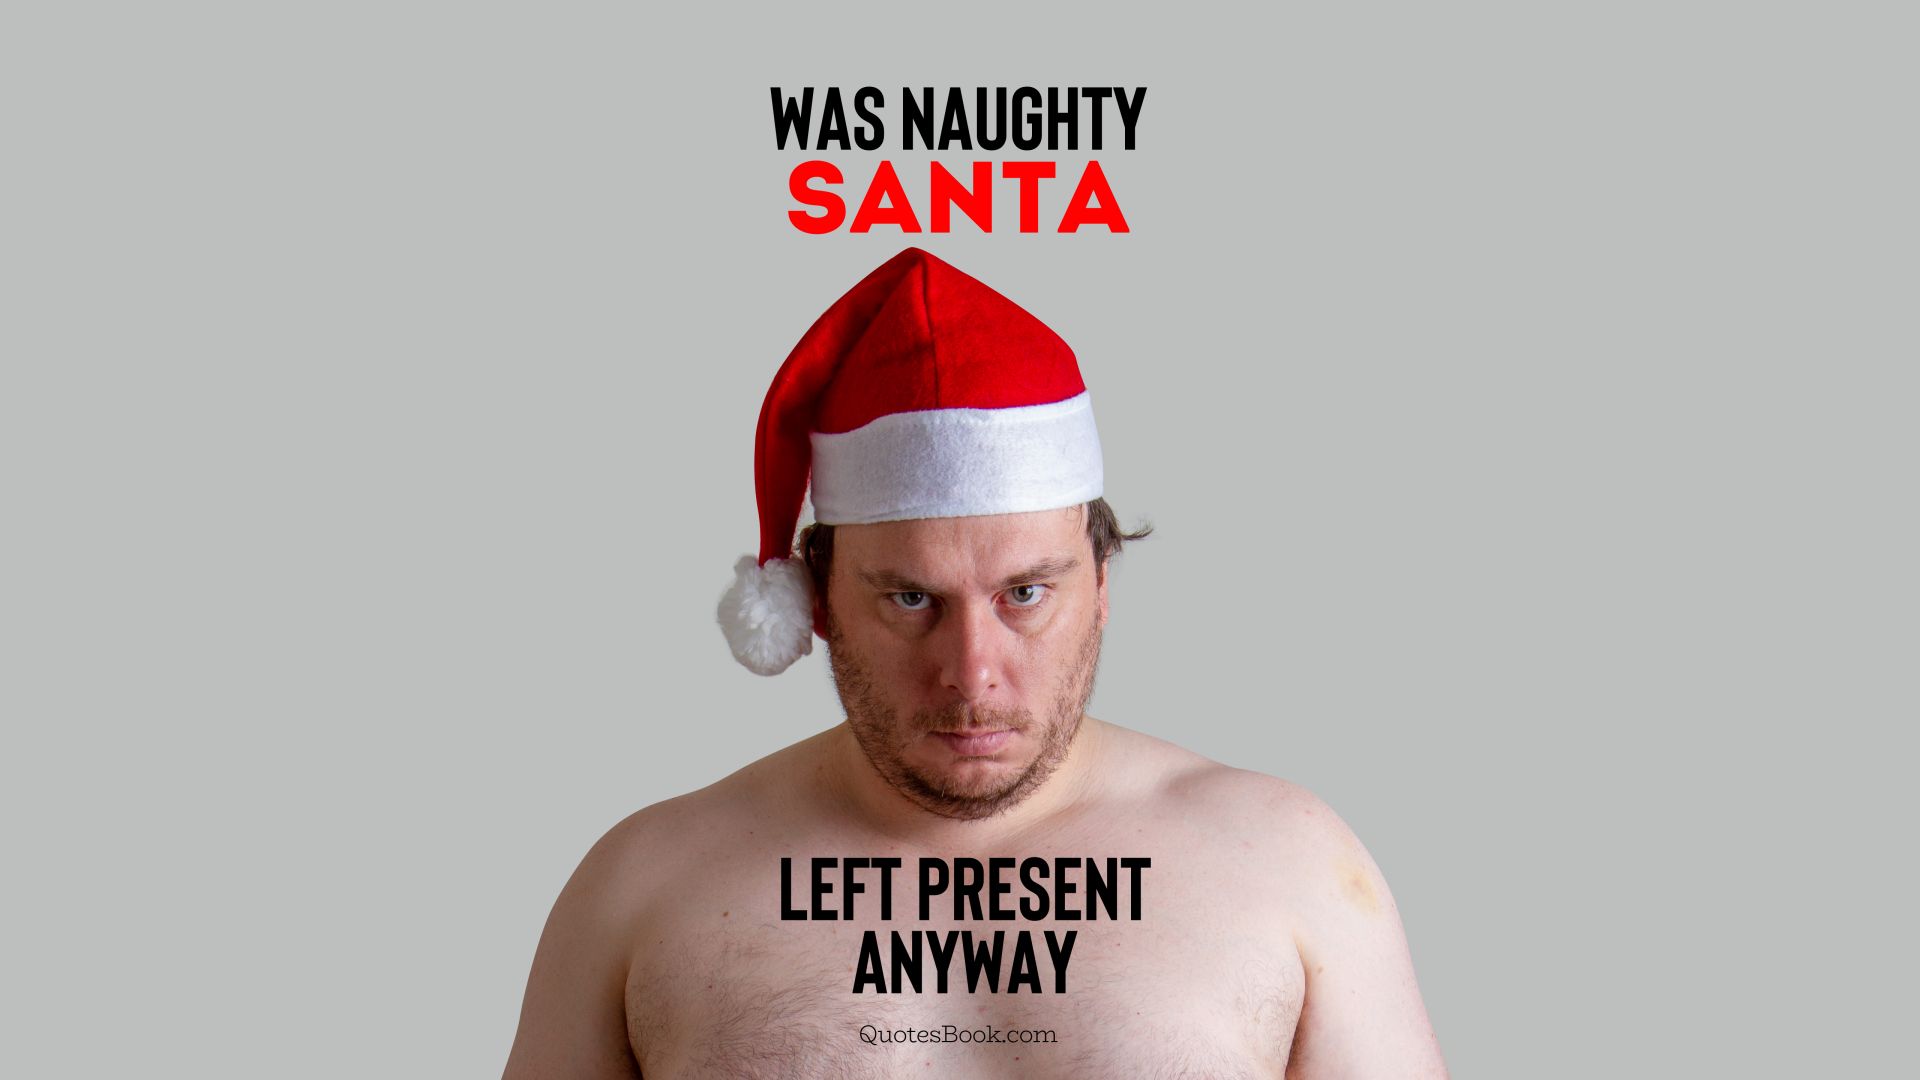 Was naughty Santa left present anyway